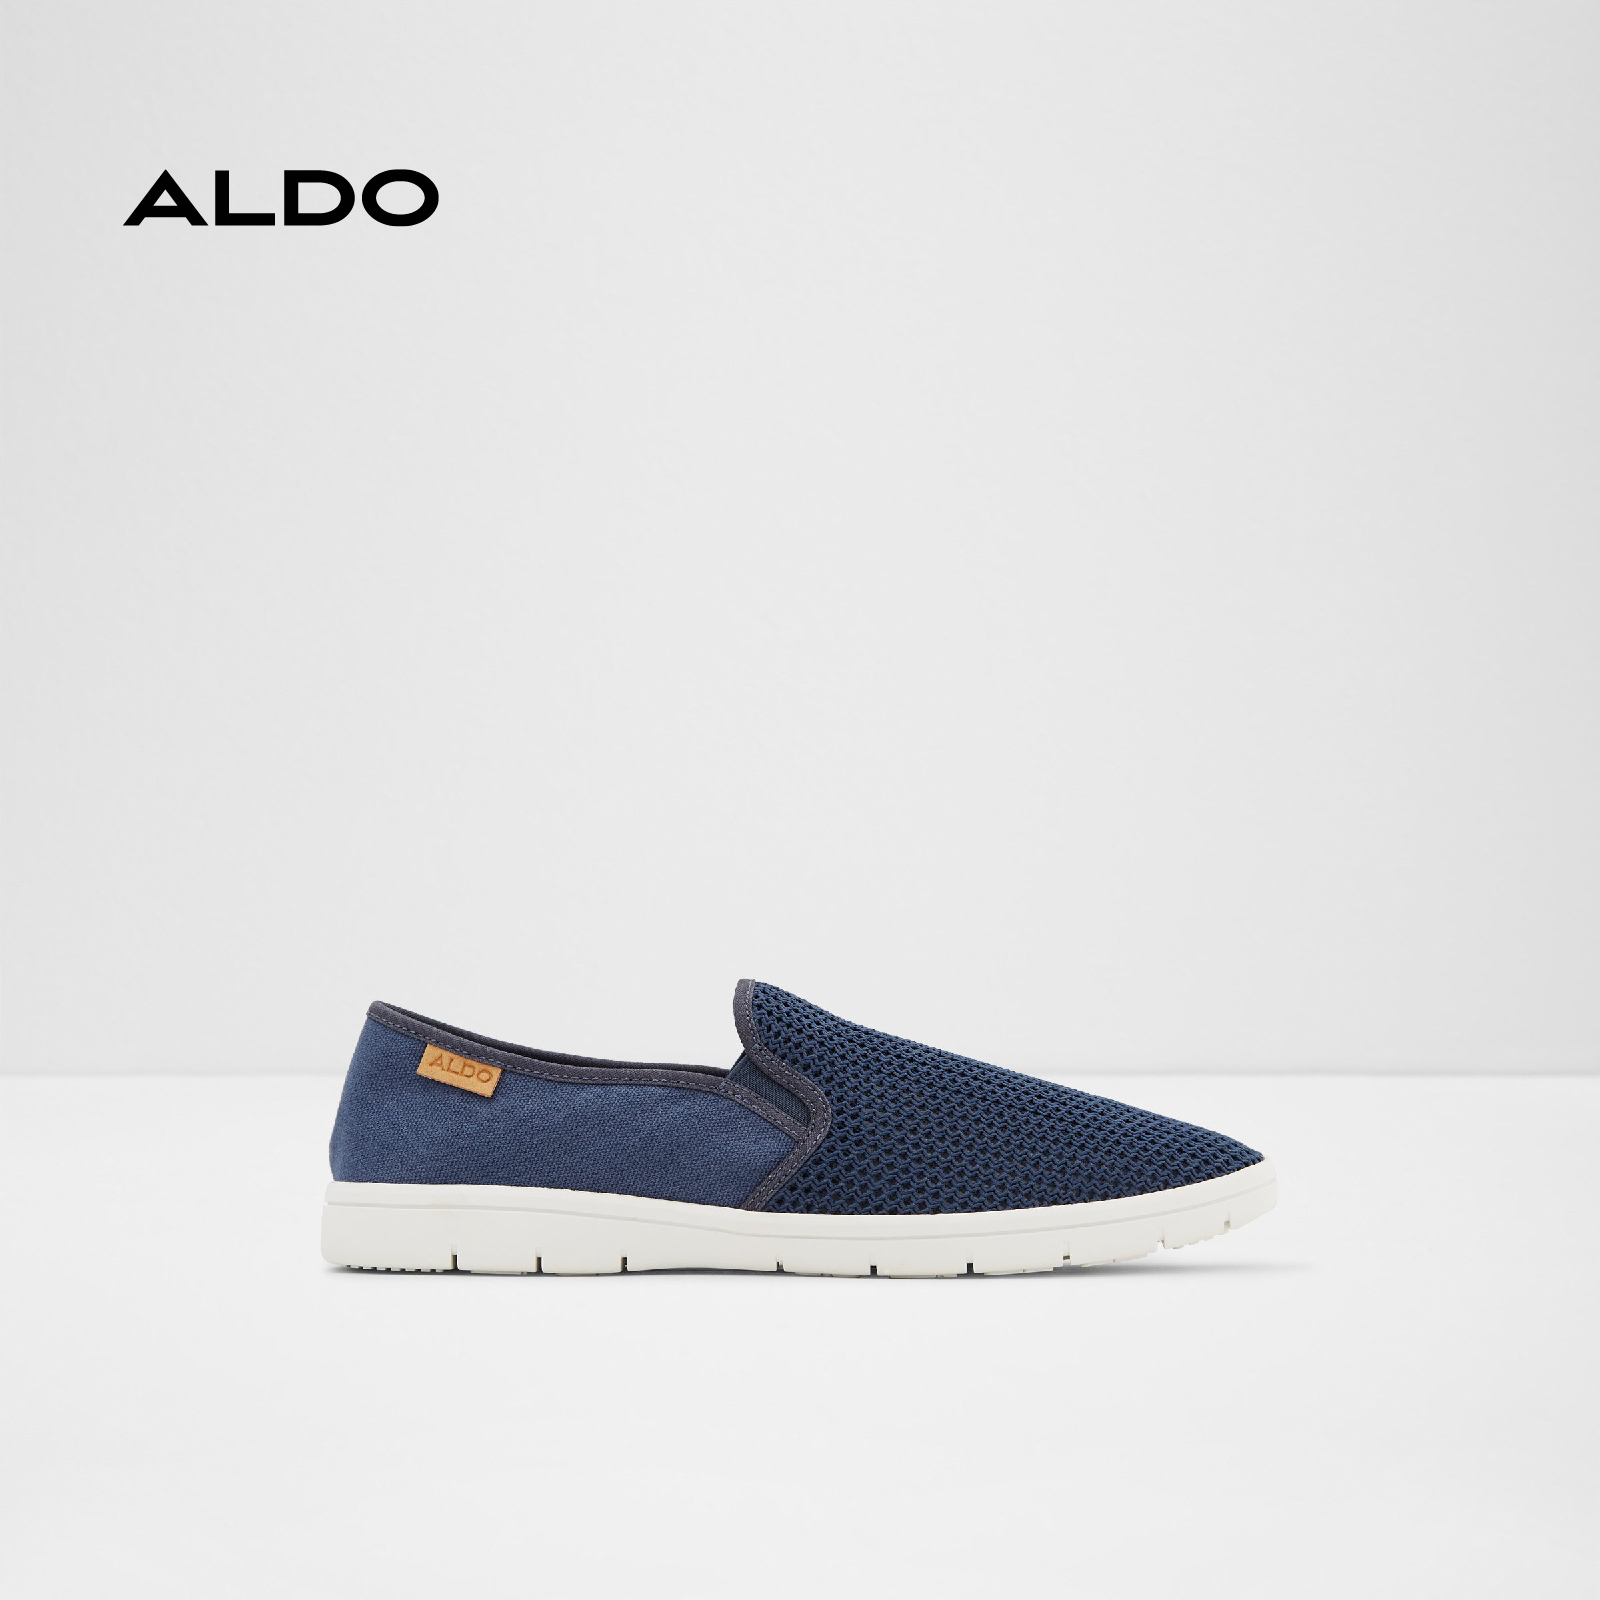 Giày lười LIBERACE Aldo